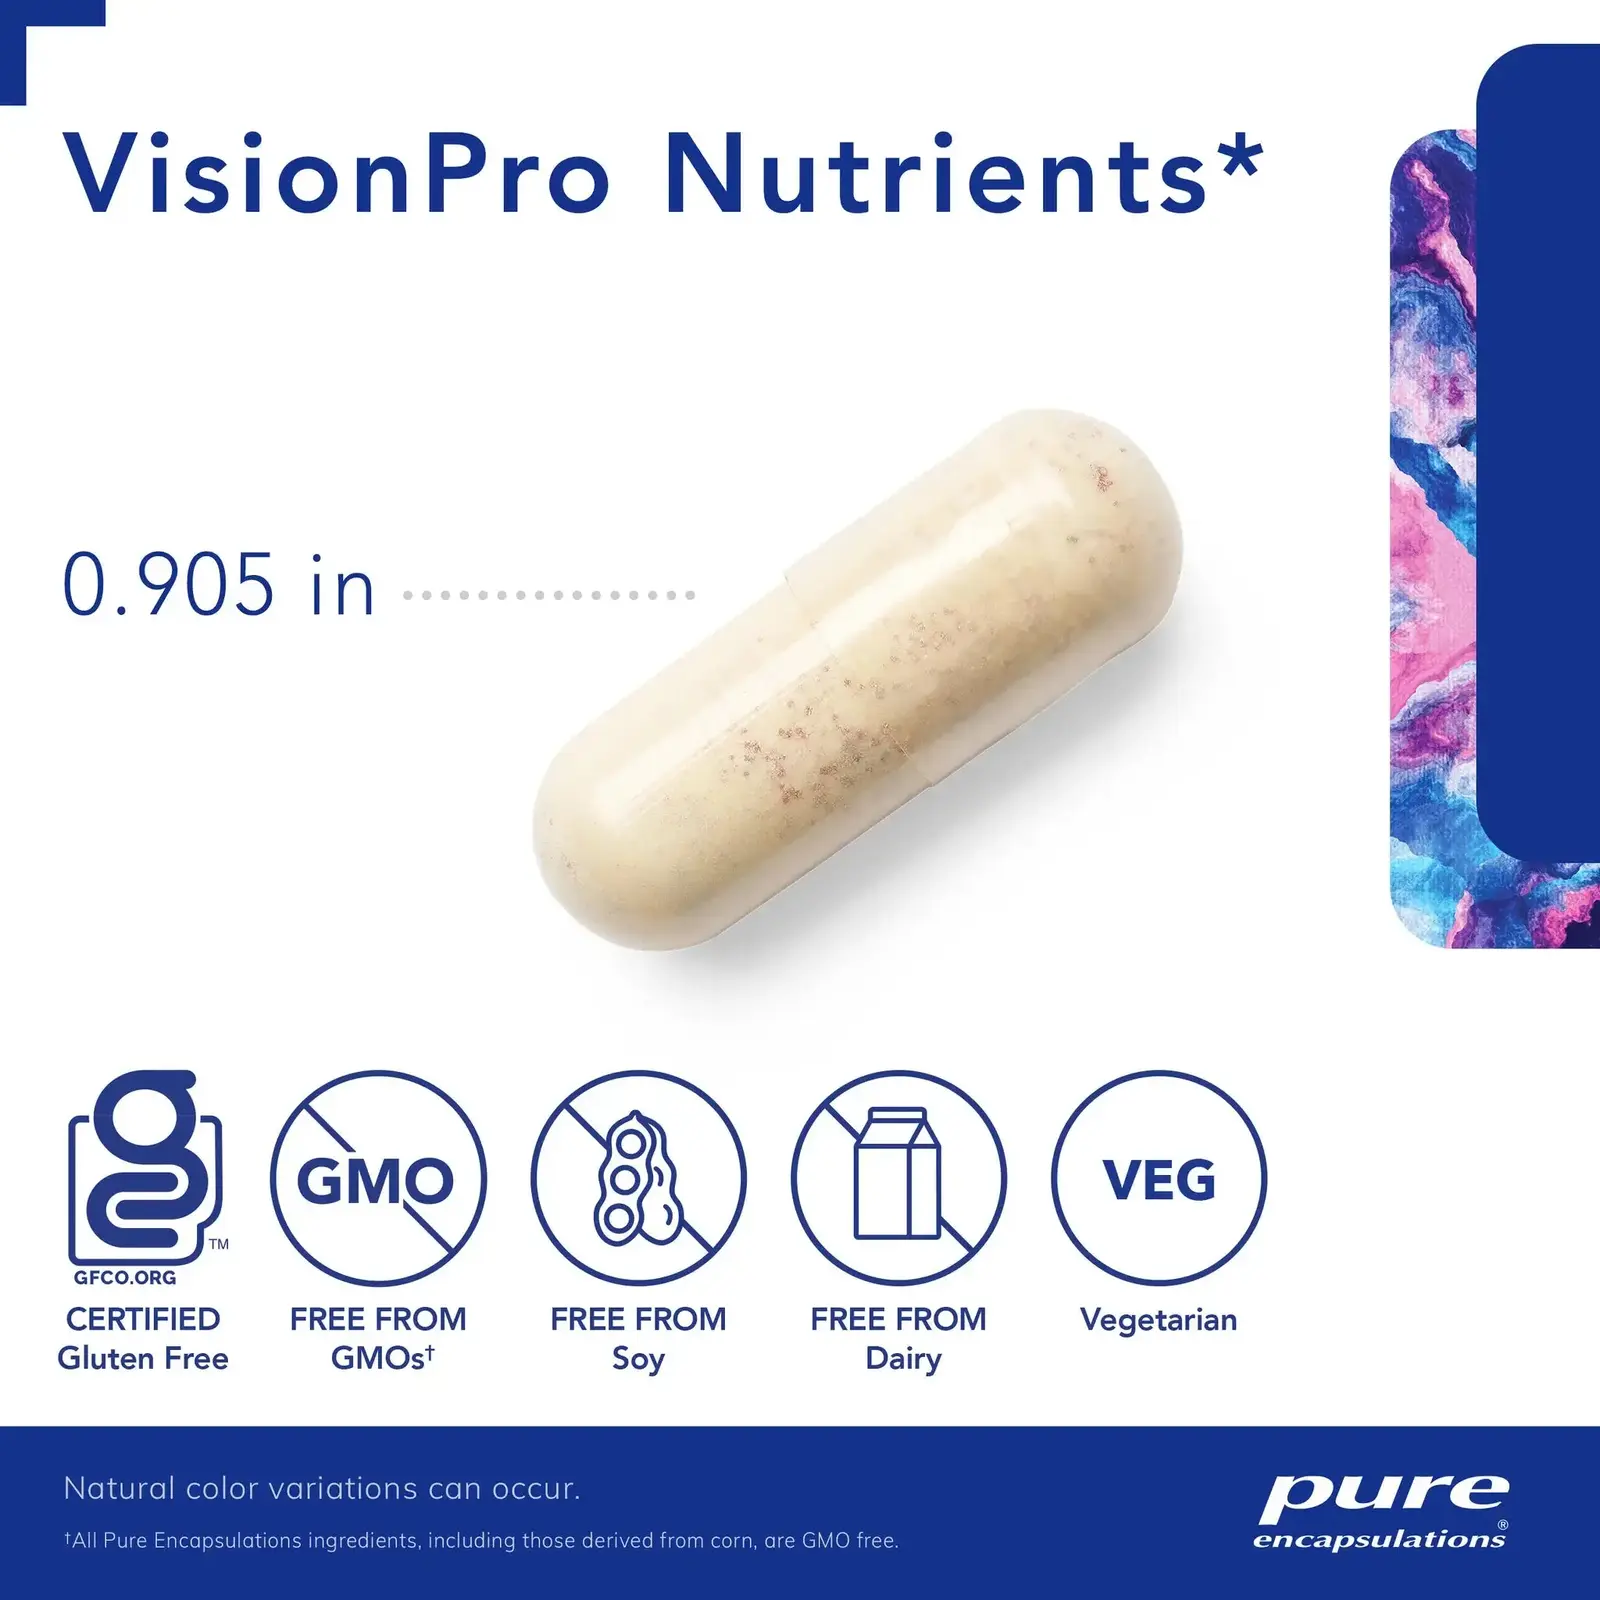 VisionPro Nutrients‡